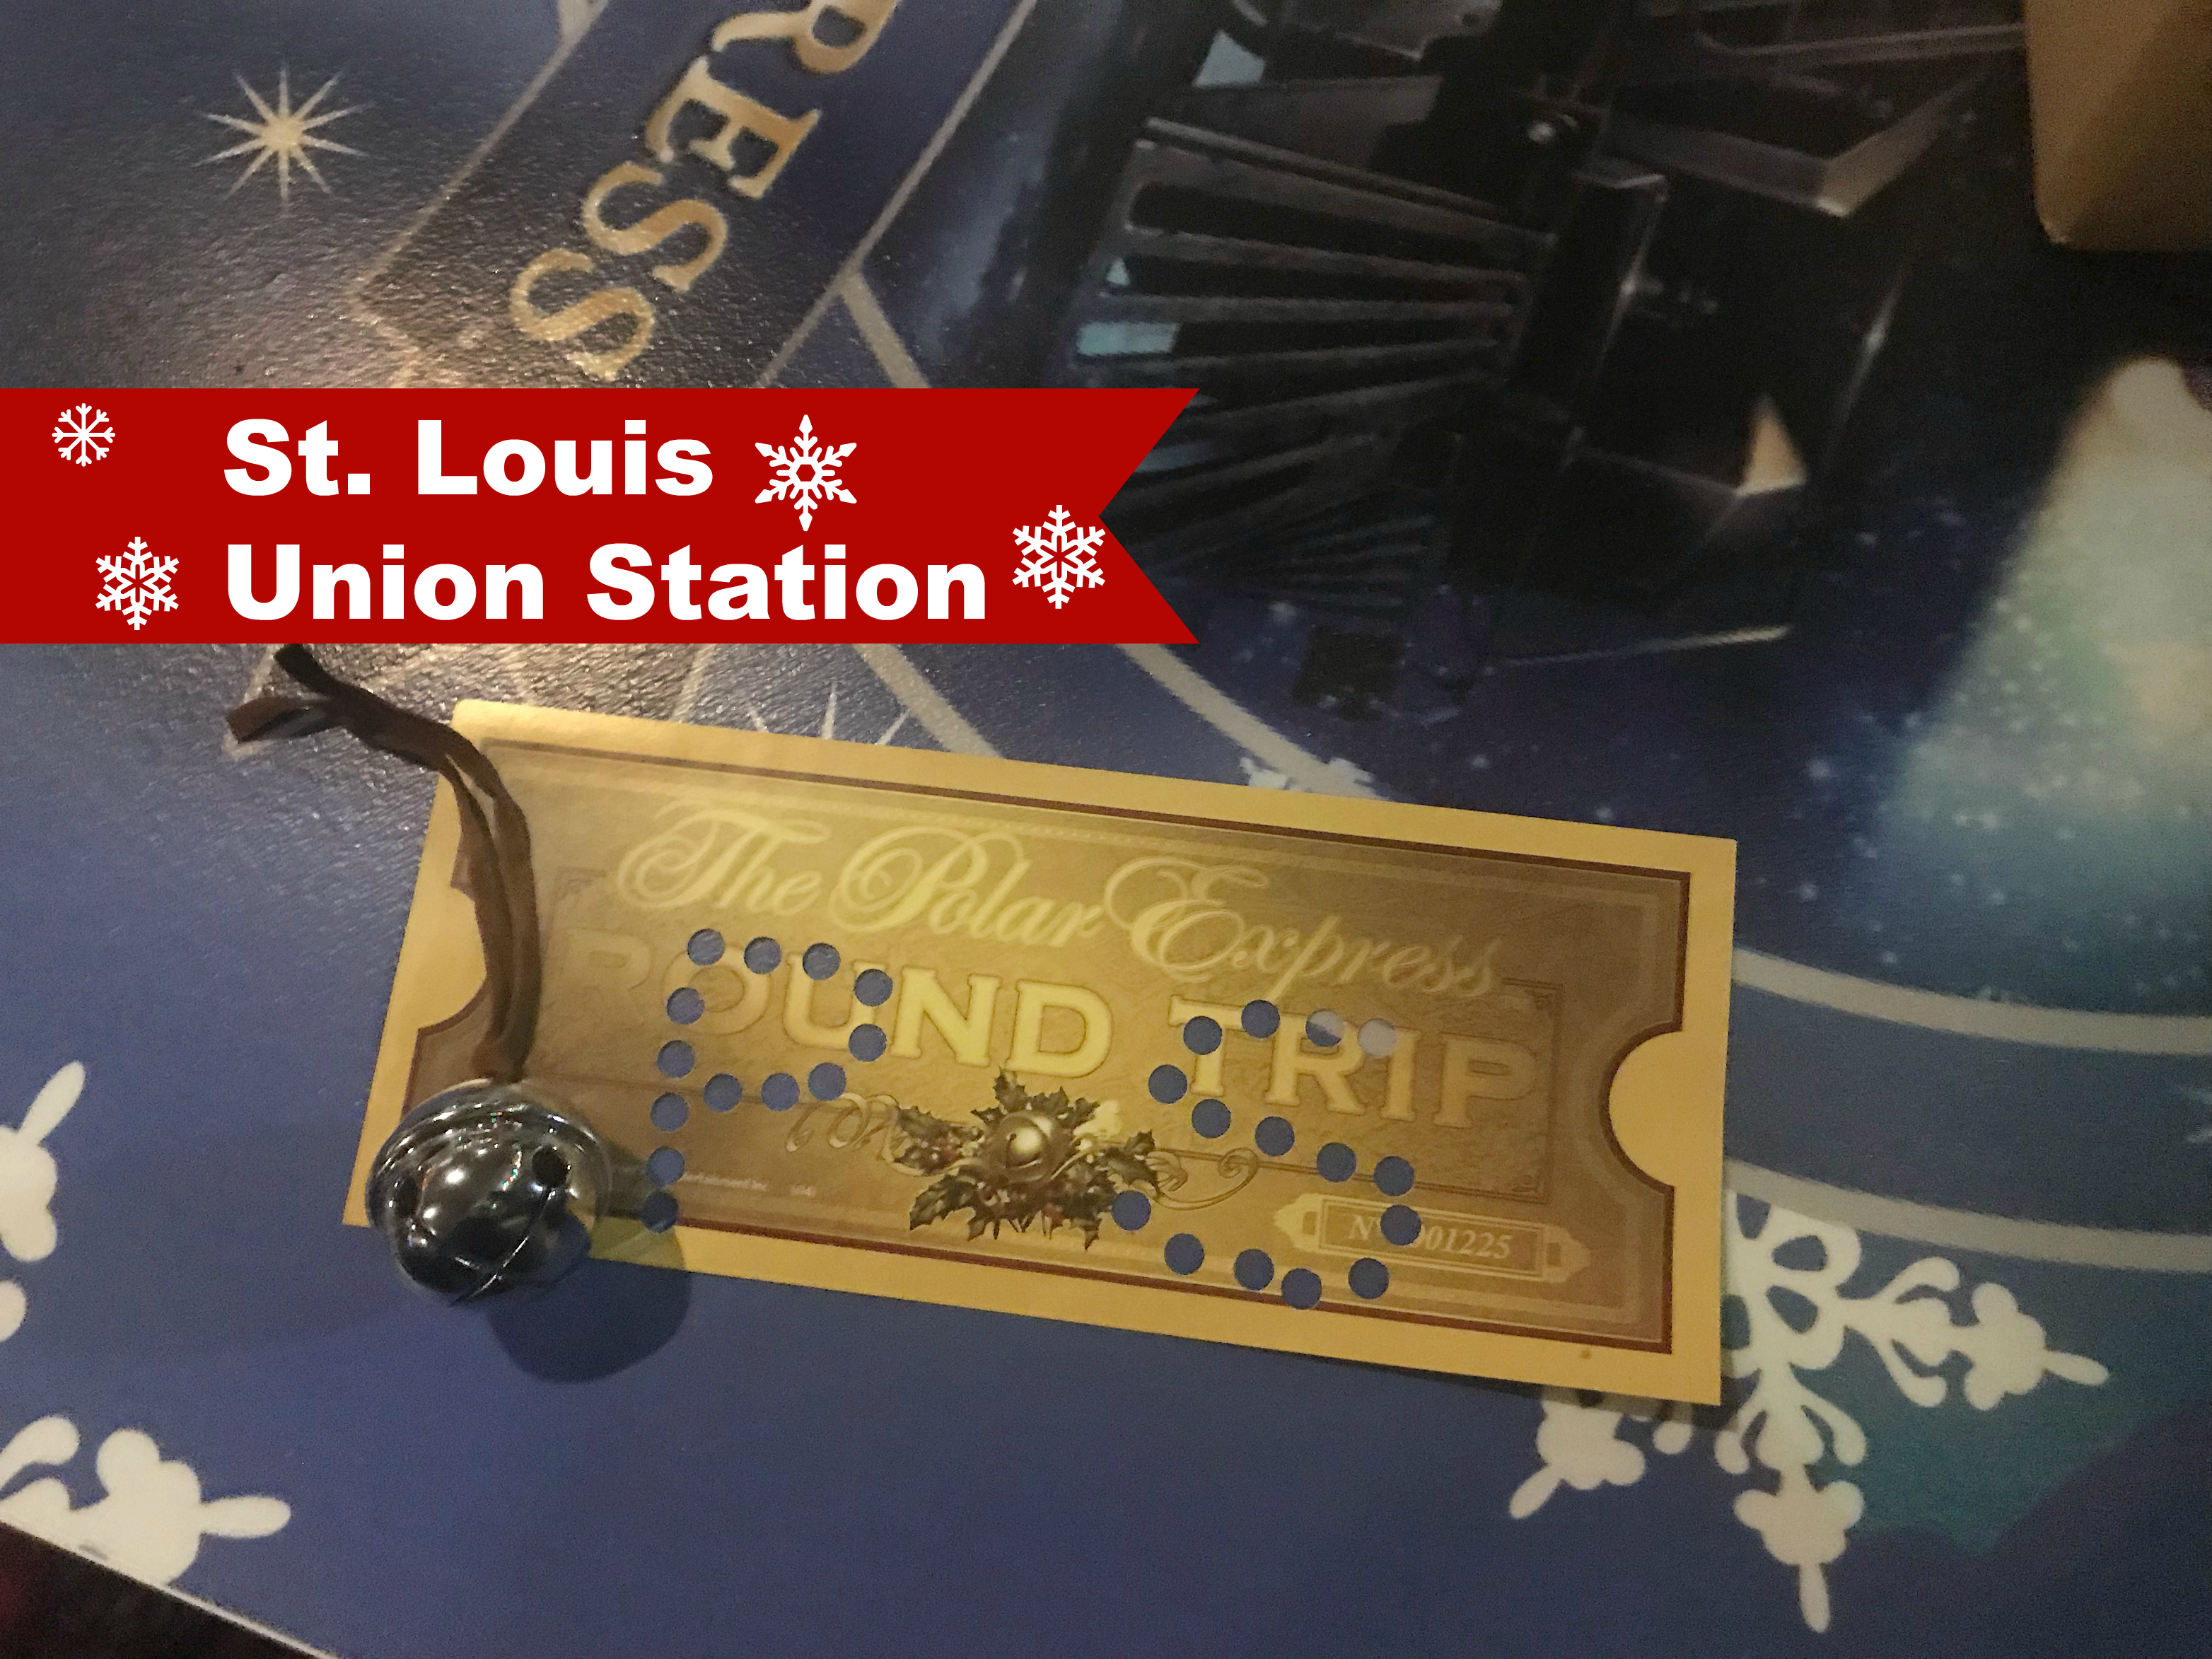 St. Louis Union Station Polar Express golden ticket.